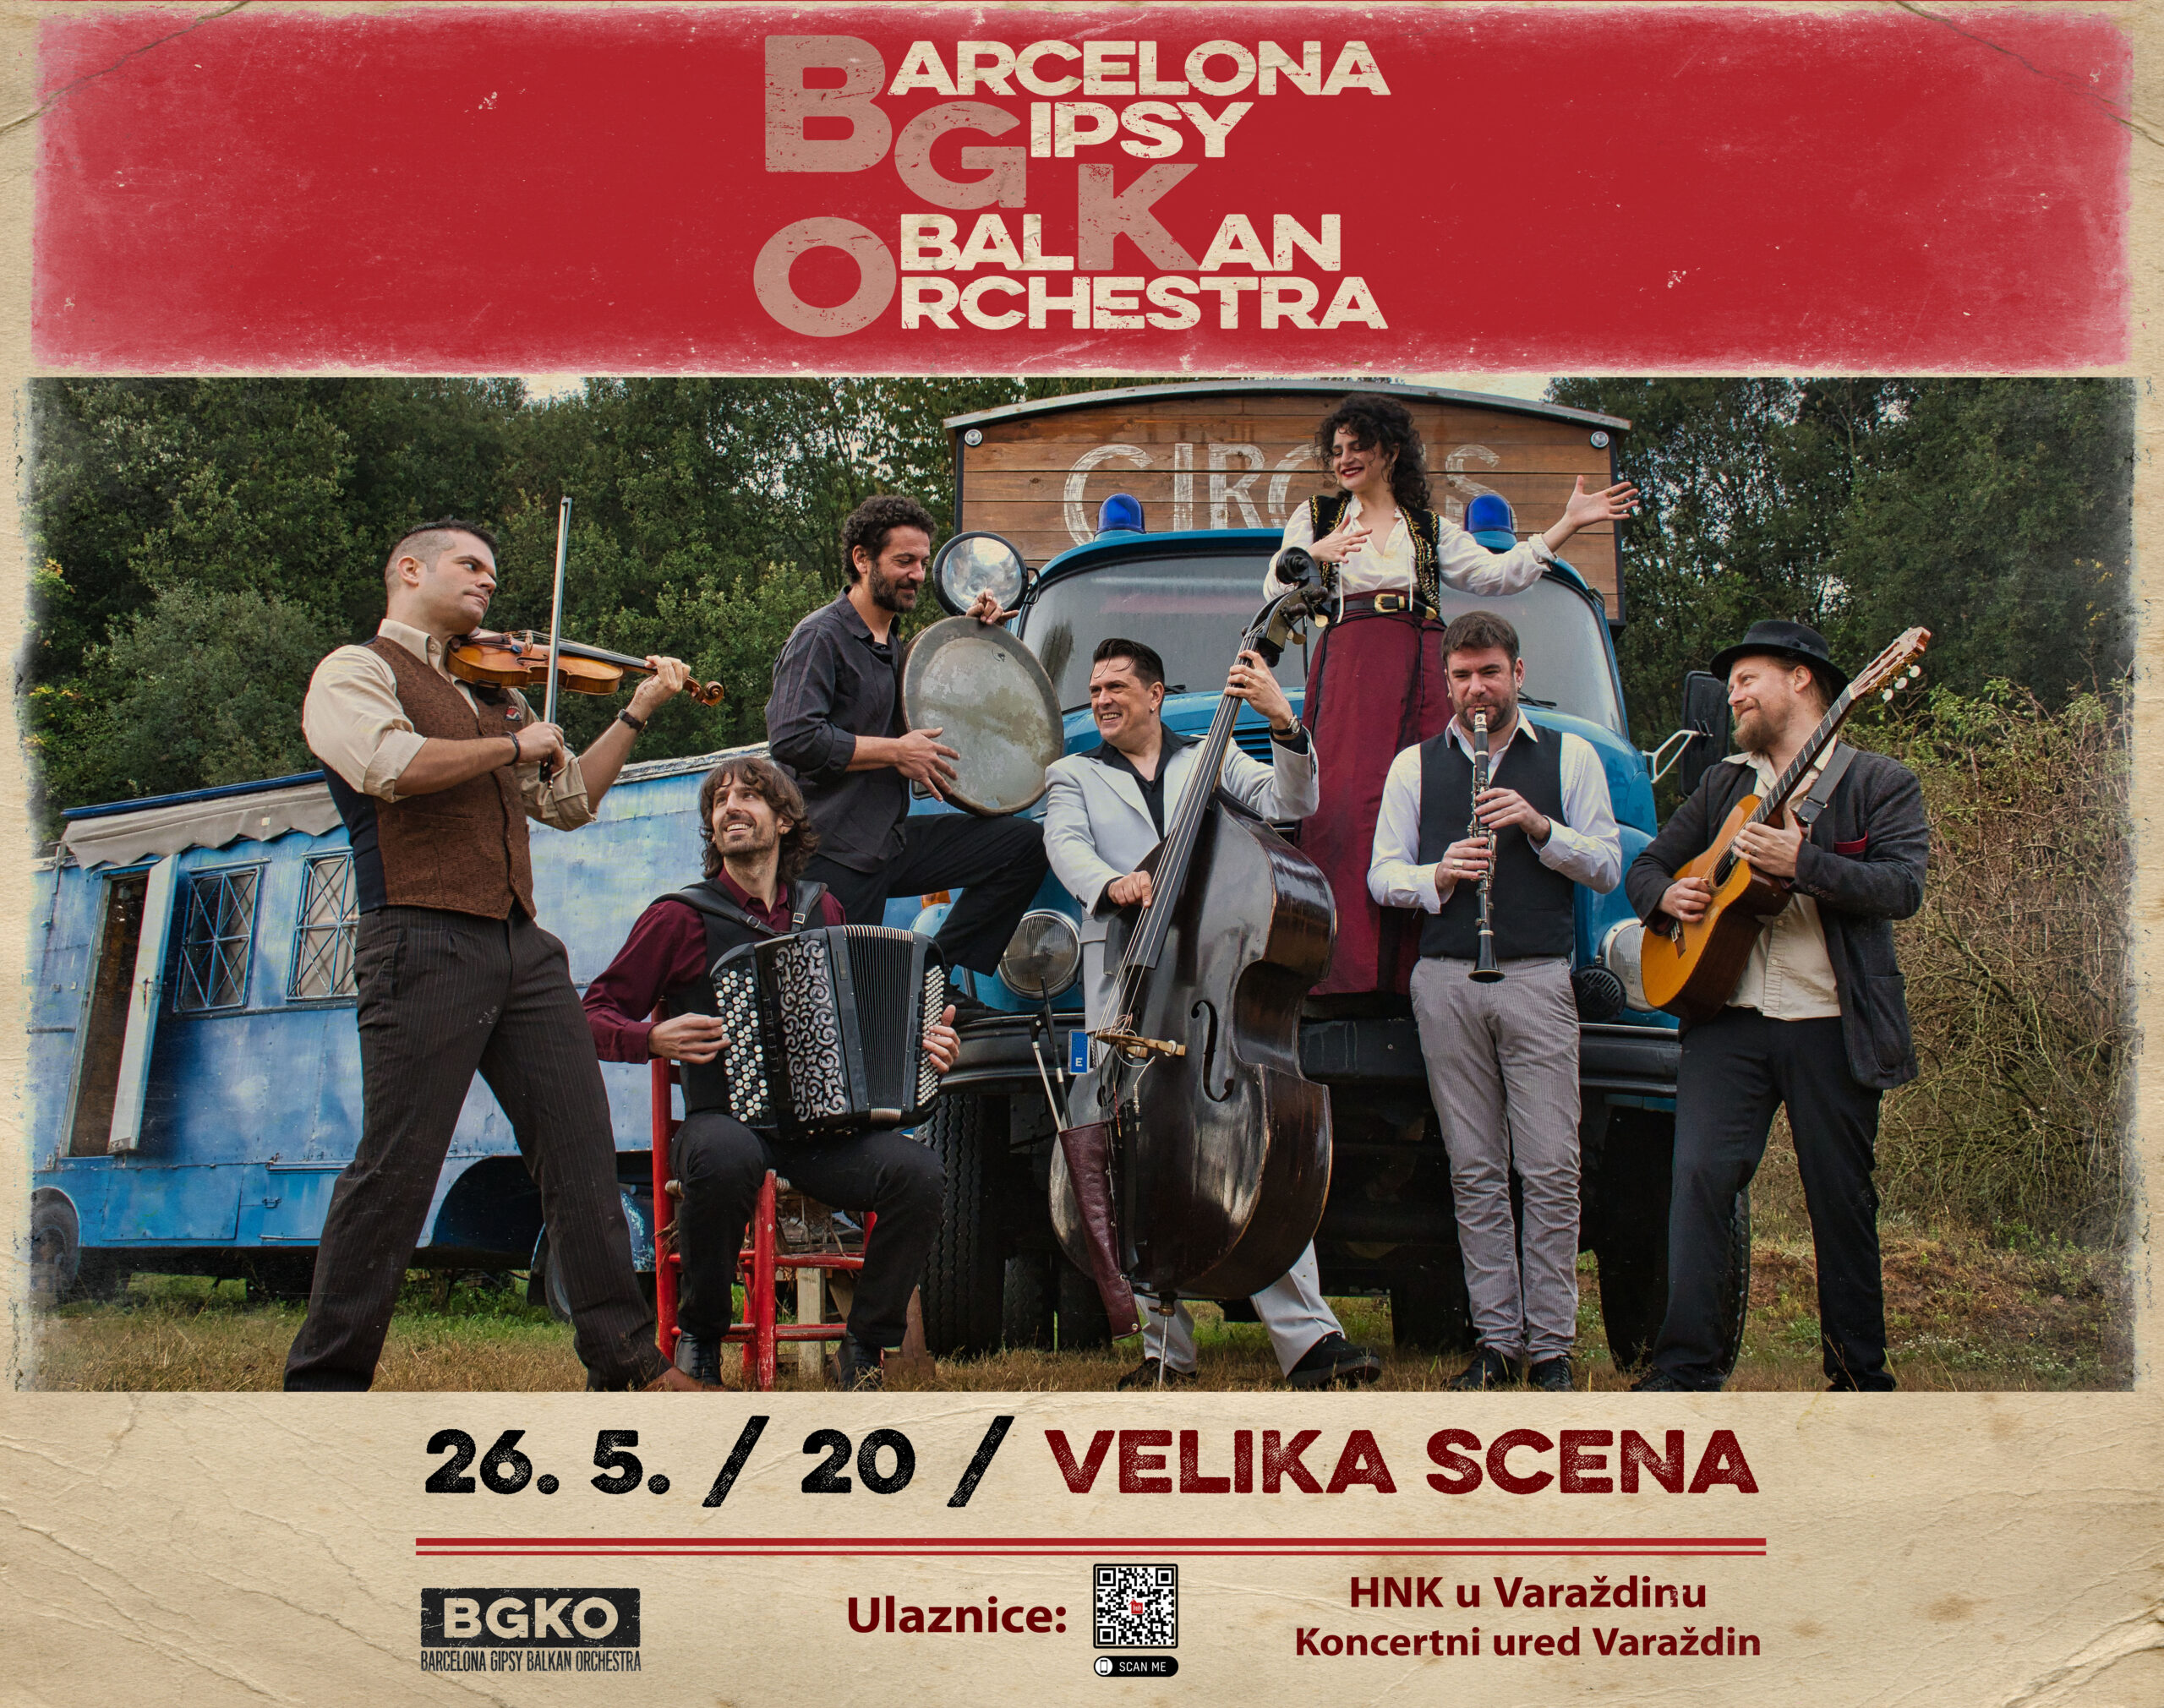 Barcelona Gipsy balKan Orchestrathumbnail - 